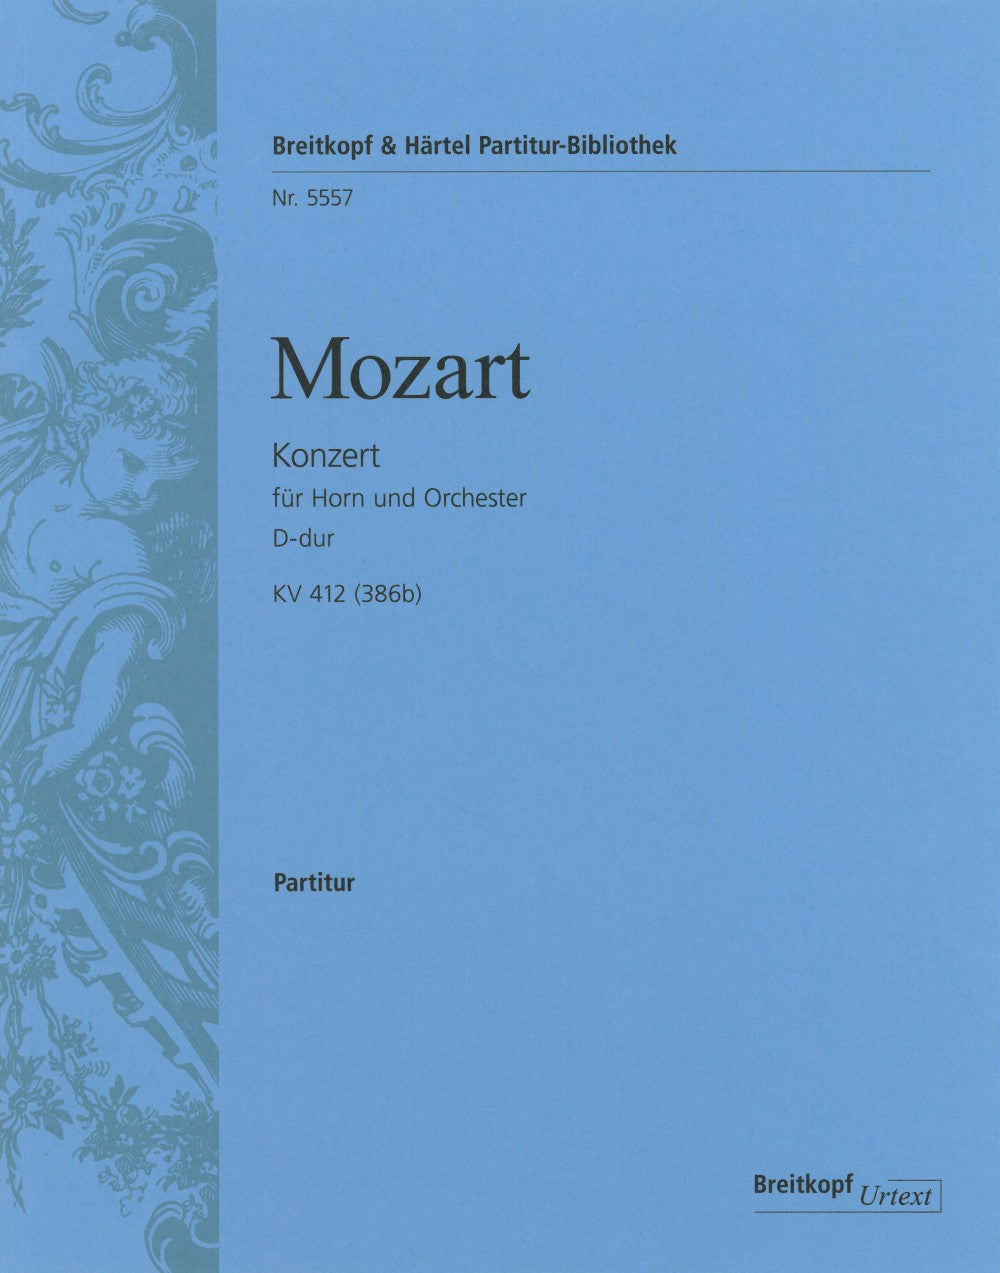 Mozart Horn concerto No. 1 K. 412